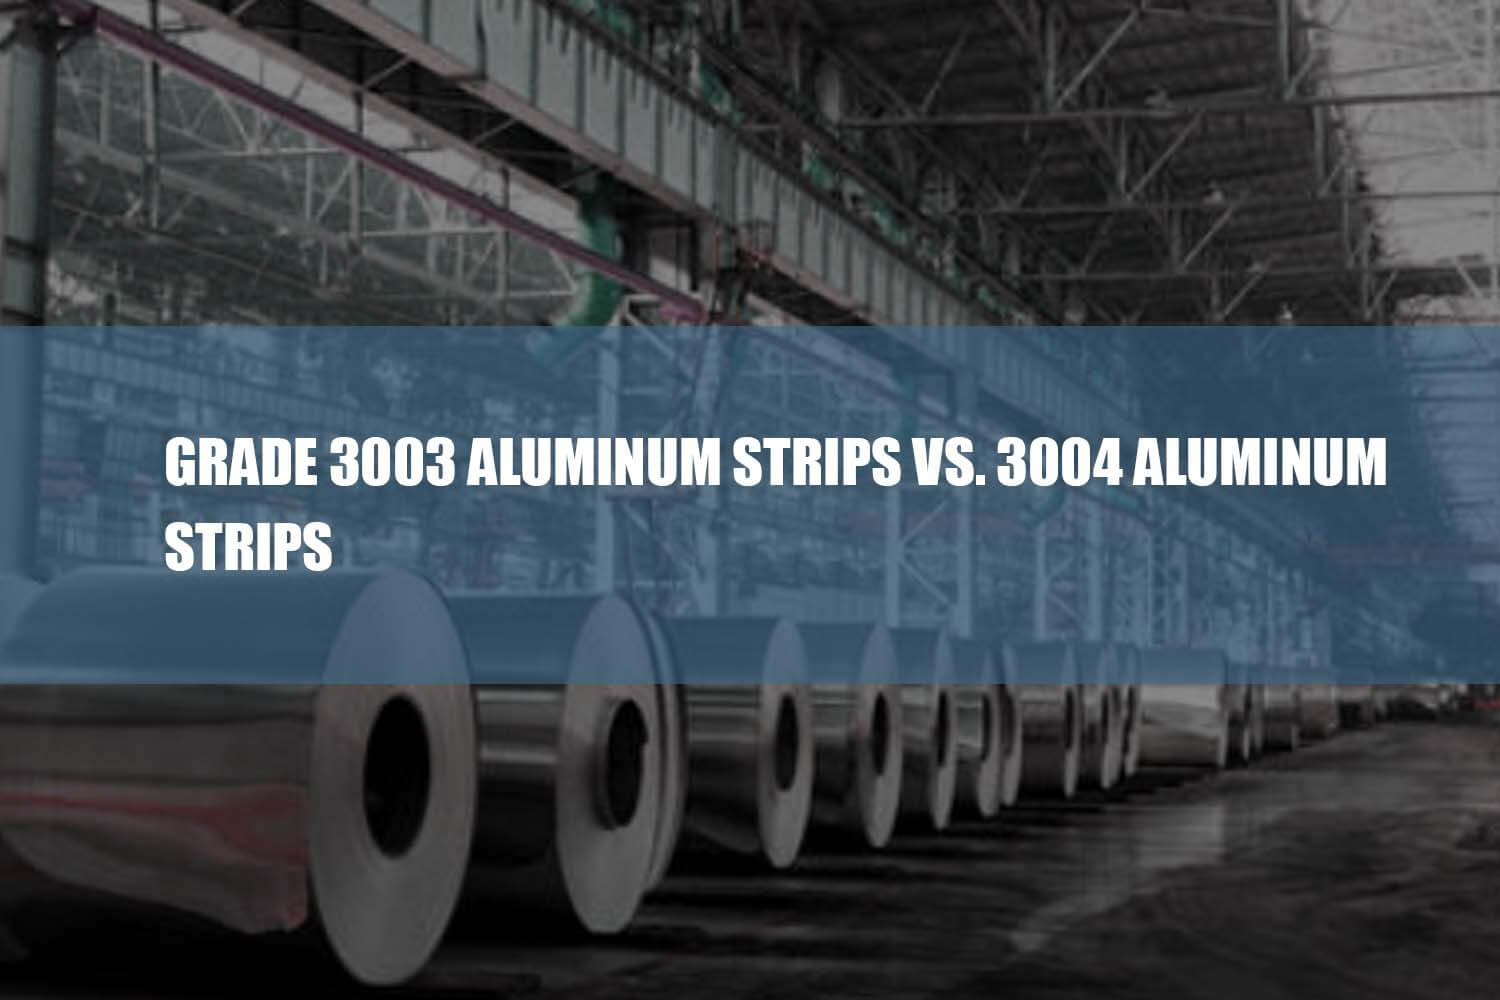 cijfer 3003 aluminum strips vs 3004 aluminium strips